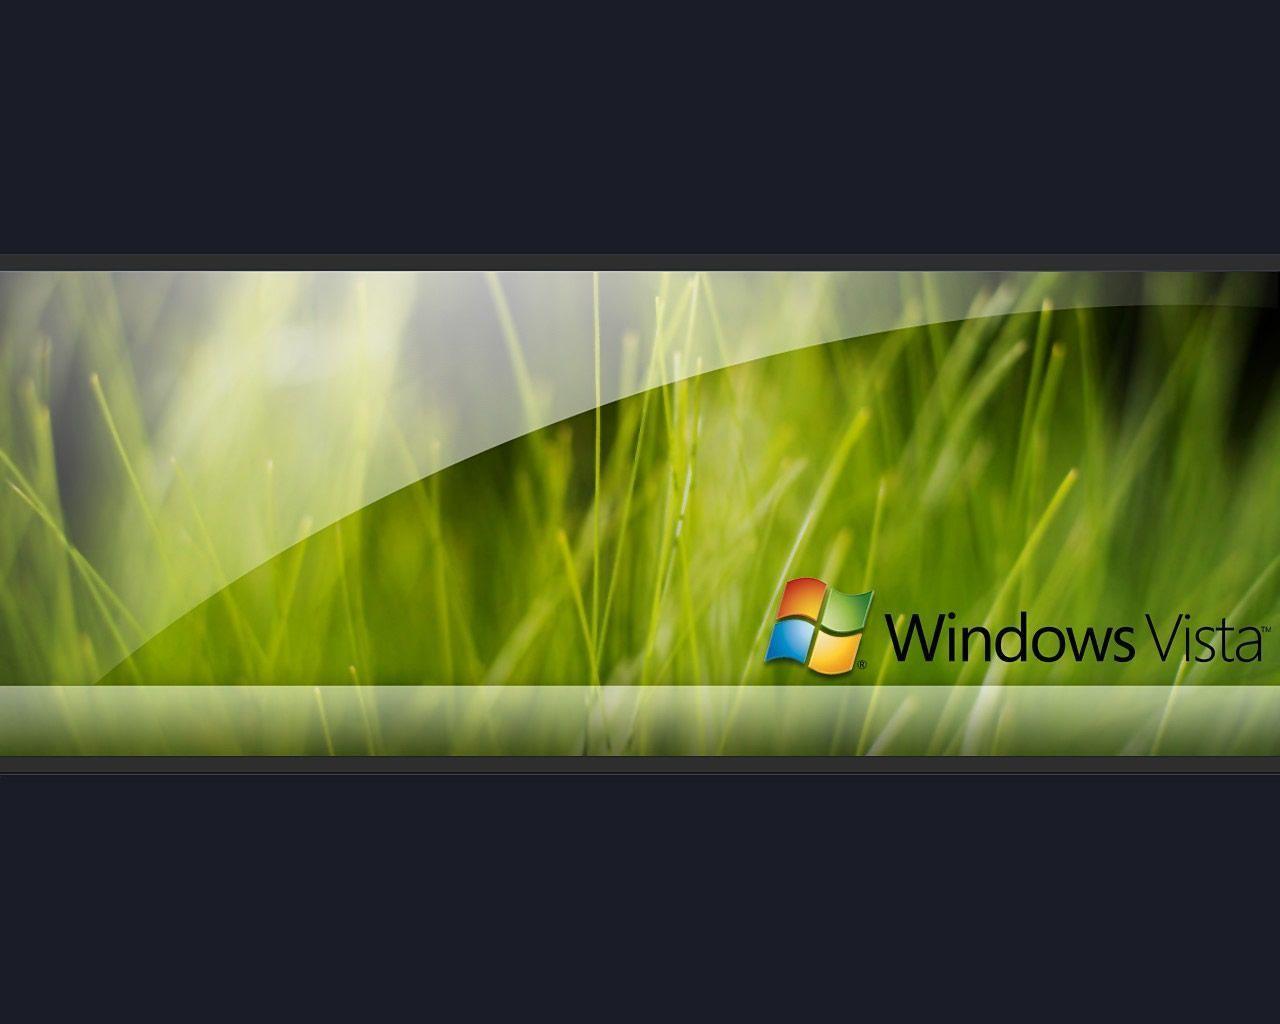 73 Windows Vista Wallpaper  WallpaperSafari